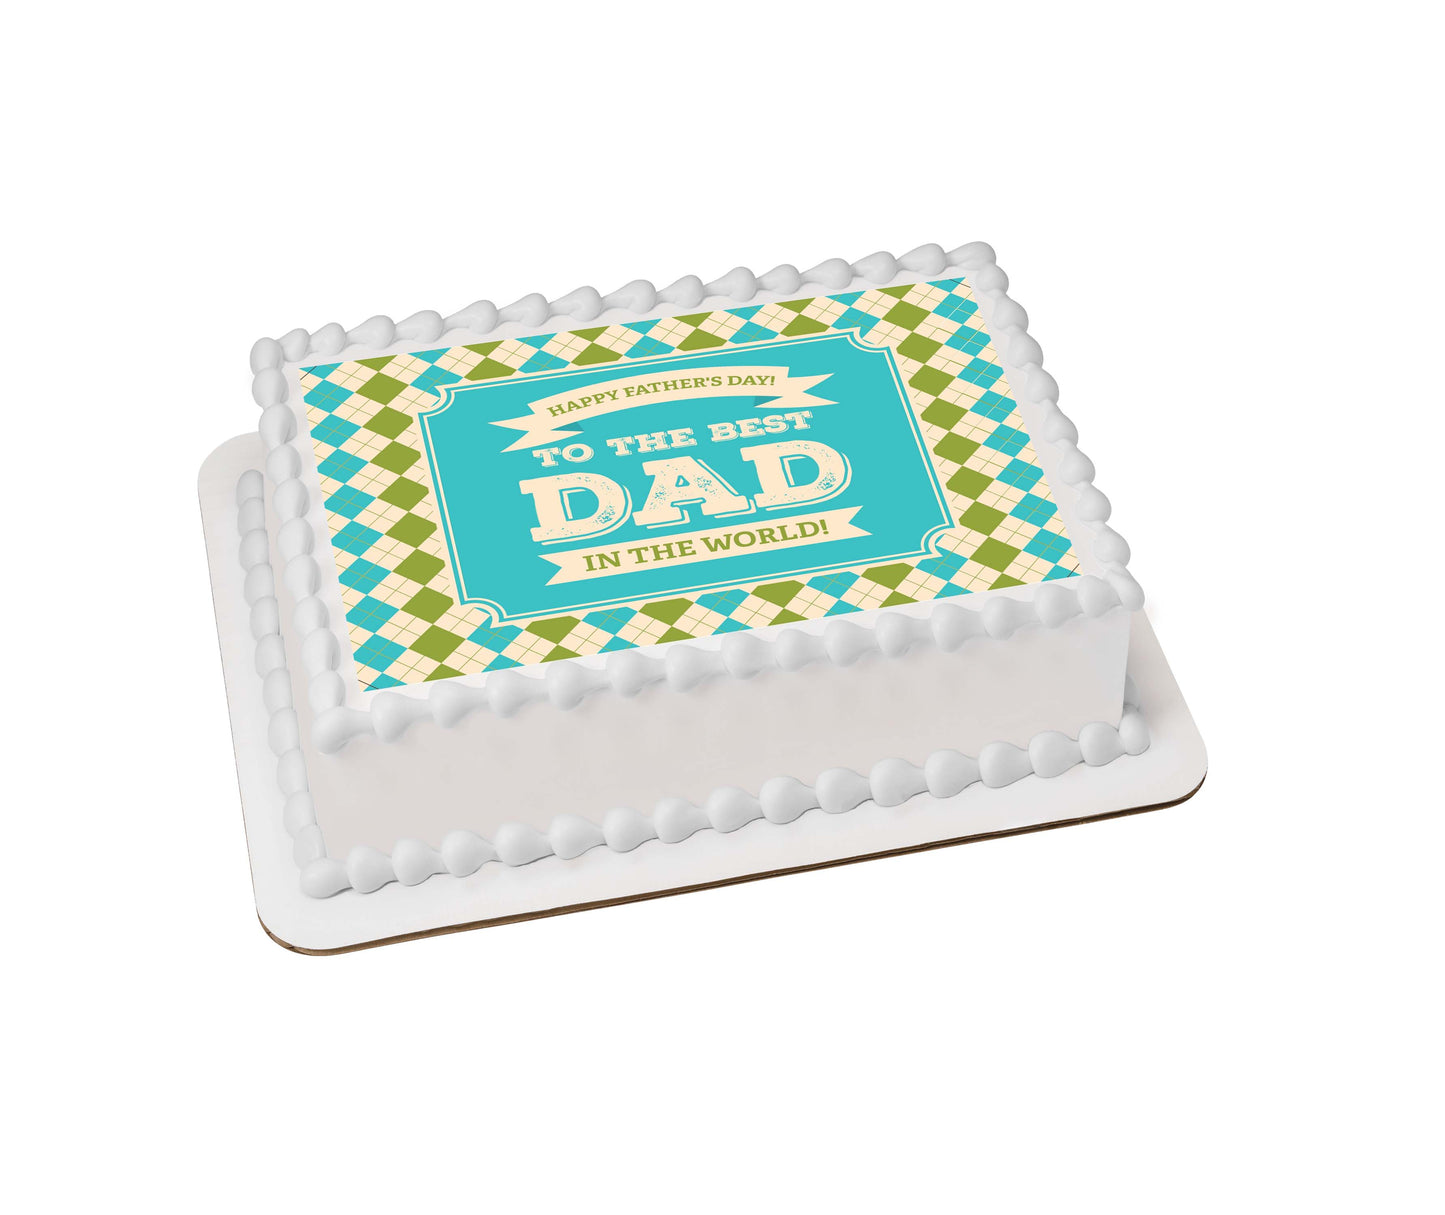 Father's Day - Edible Icing Image Edible Cake Topper, Edible Cake Image, ,printsoncakes